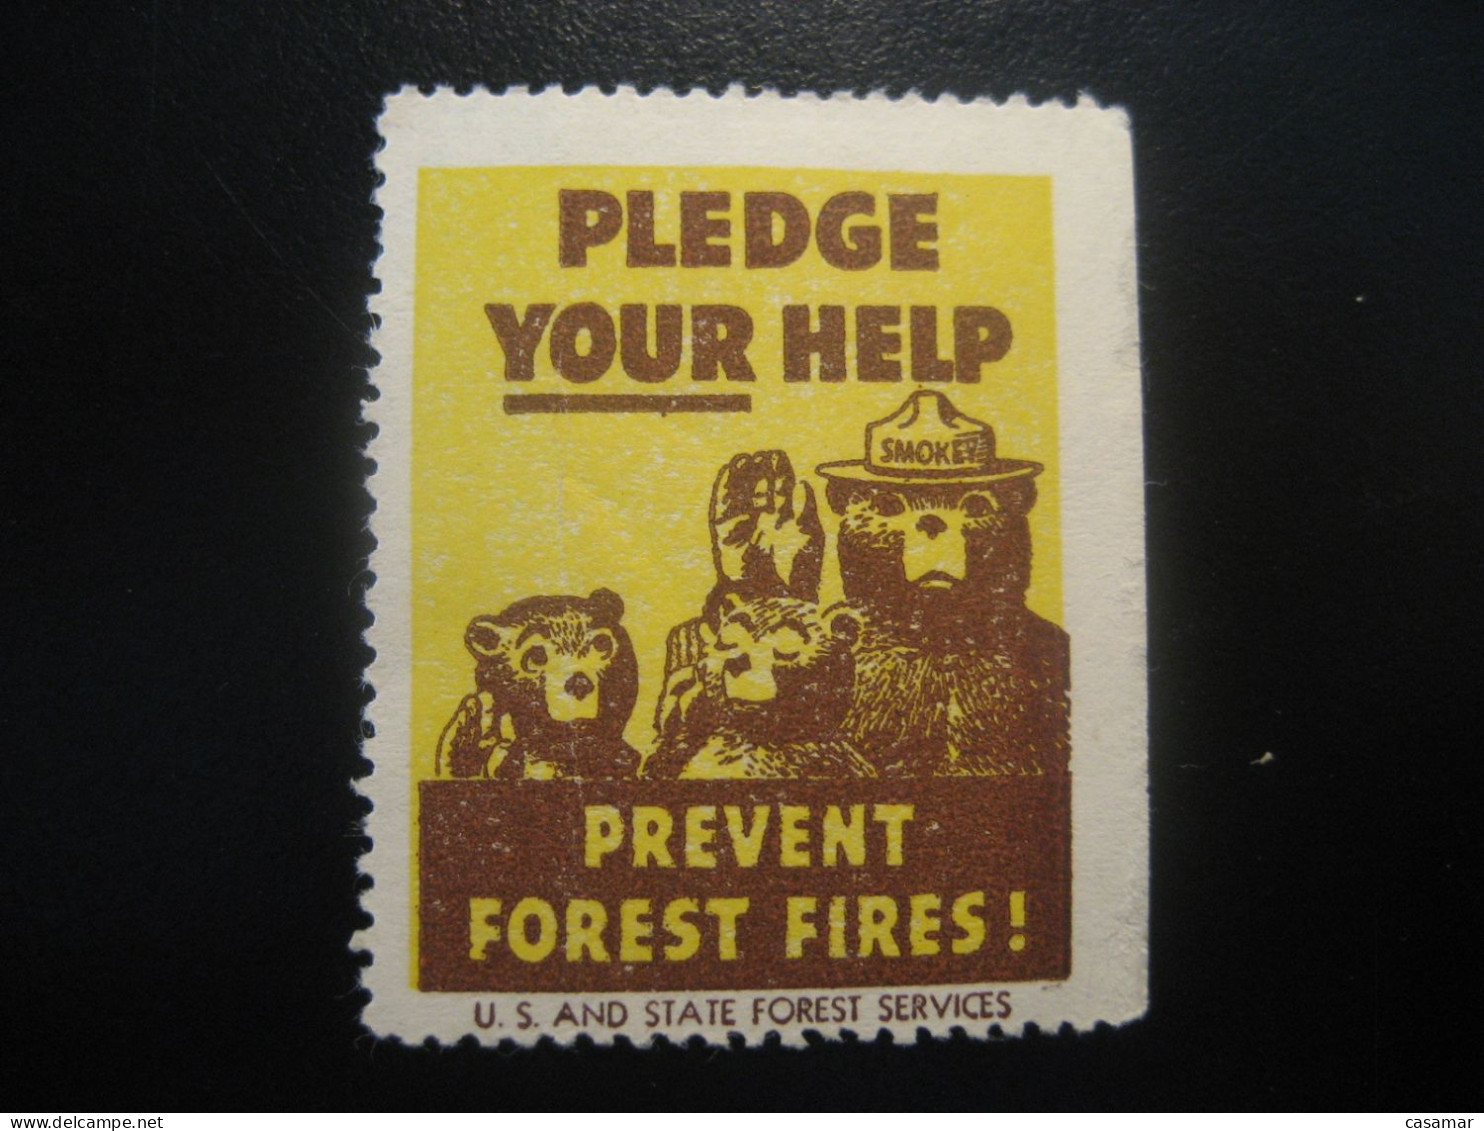 Prevent Forest Fires Fire Fireman Firemen Bear Poster Stamp Vignette USA Label - Firemen